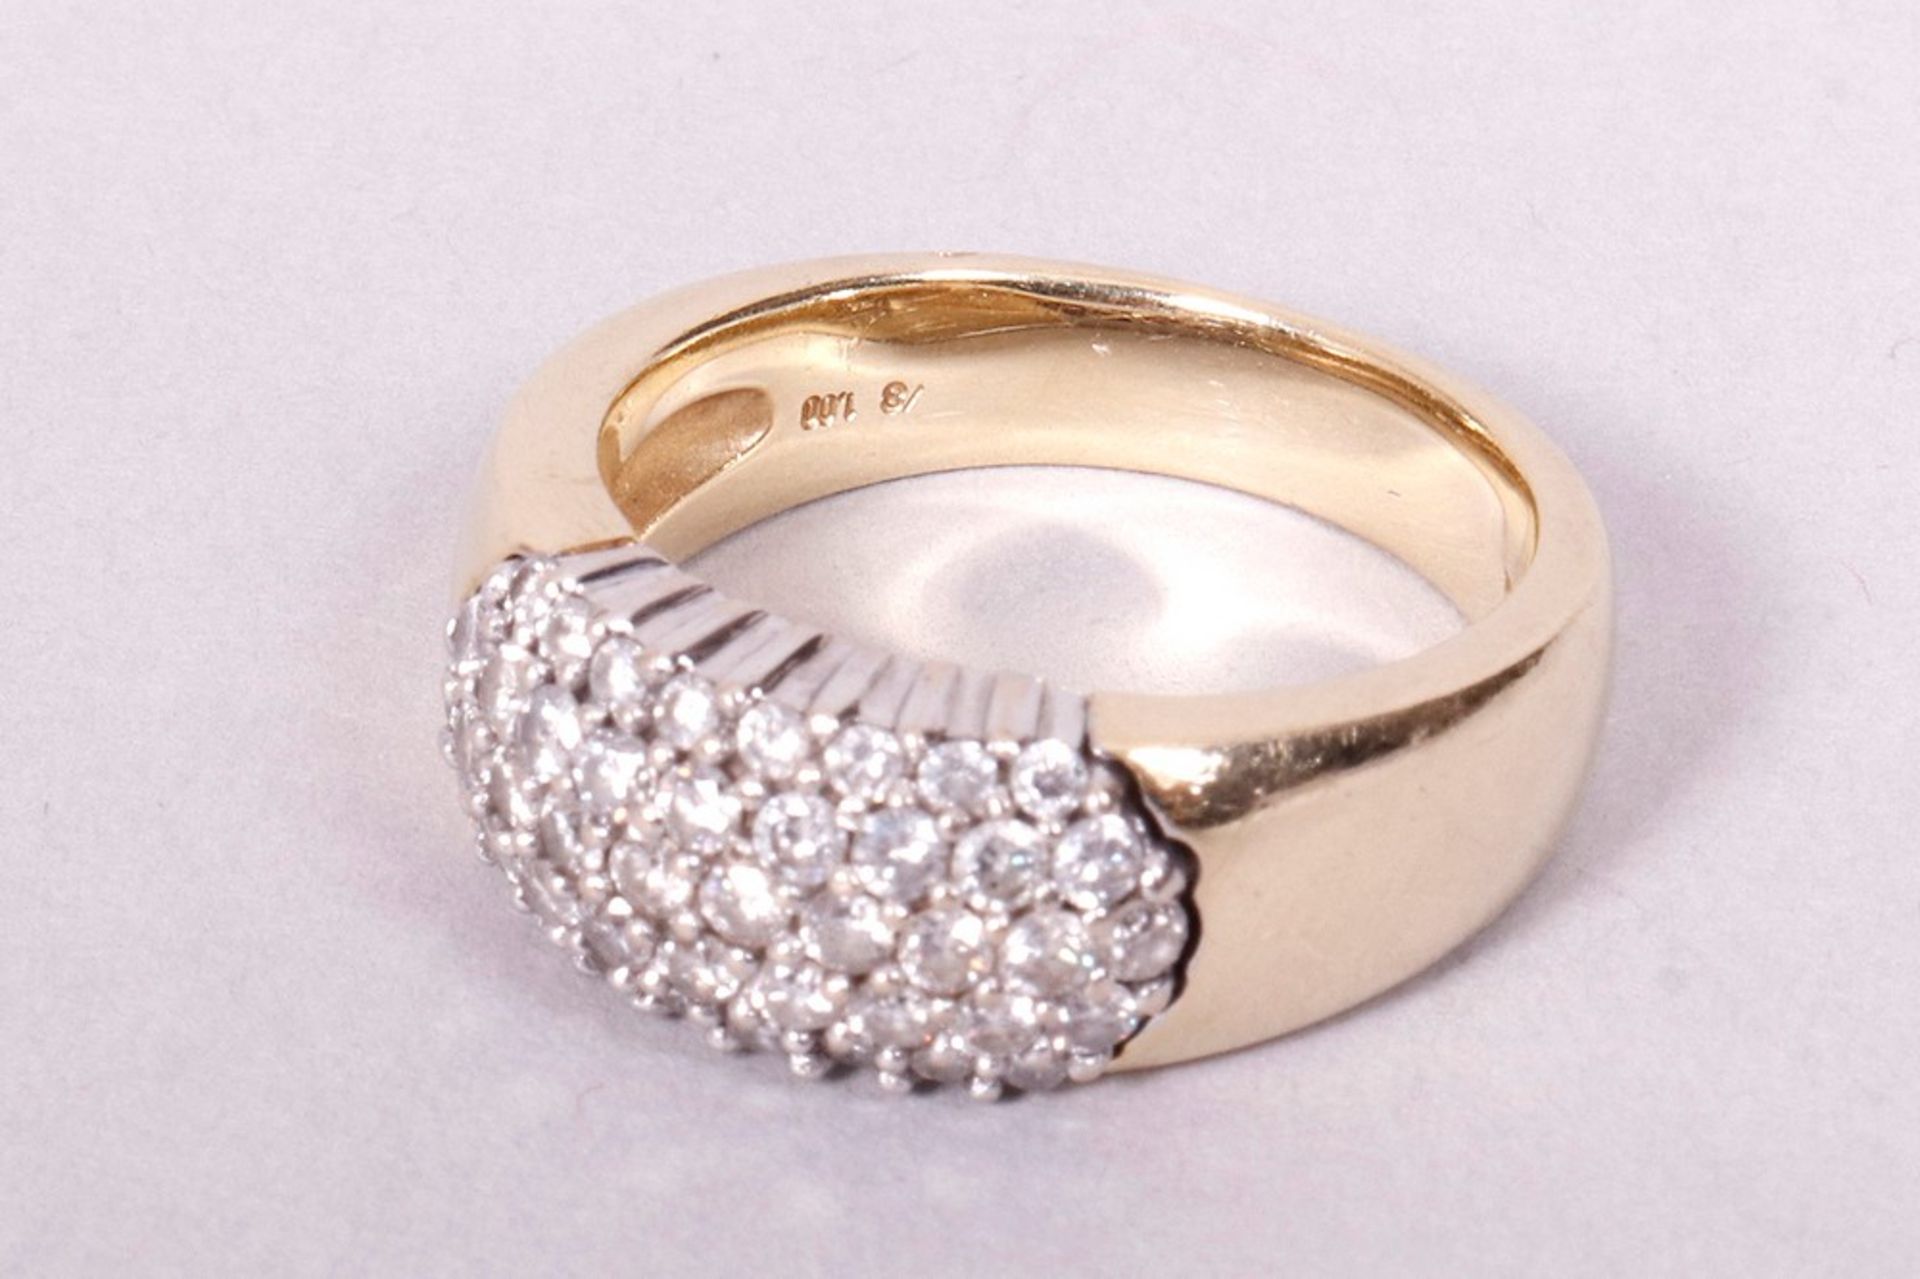 Band ring, 585 GG - Image 3 of 6